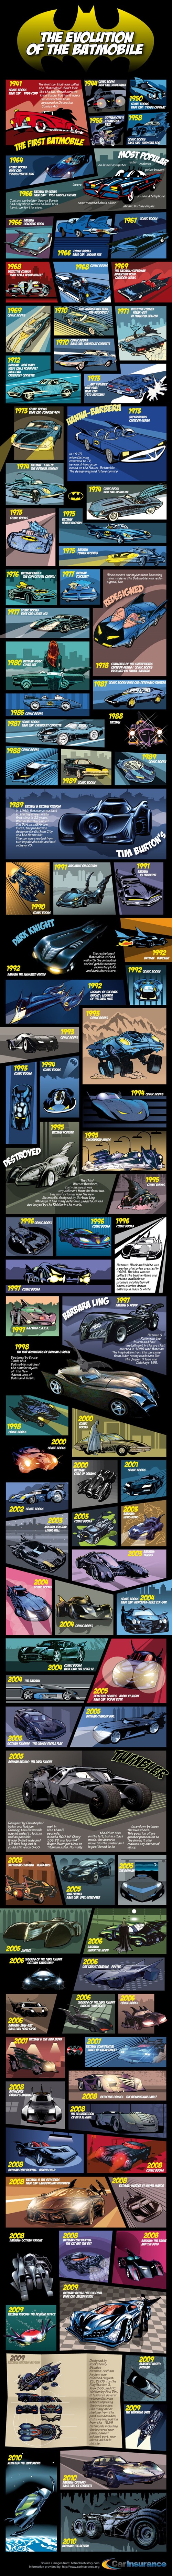 Evolution of the batmobile